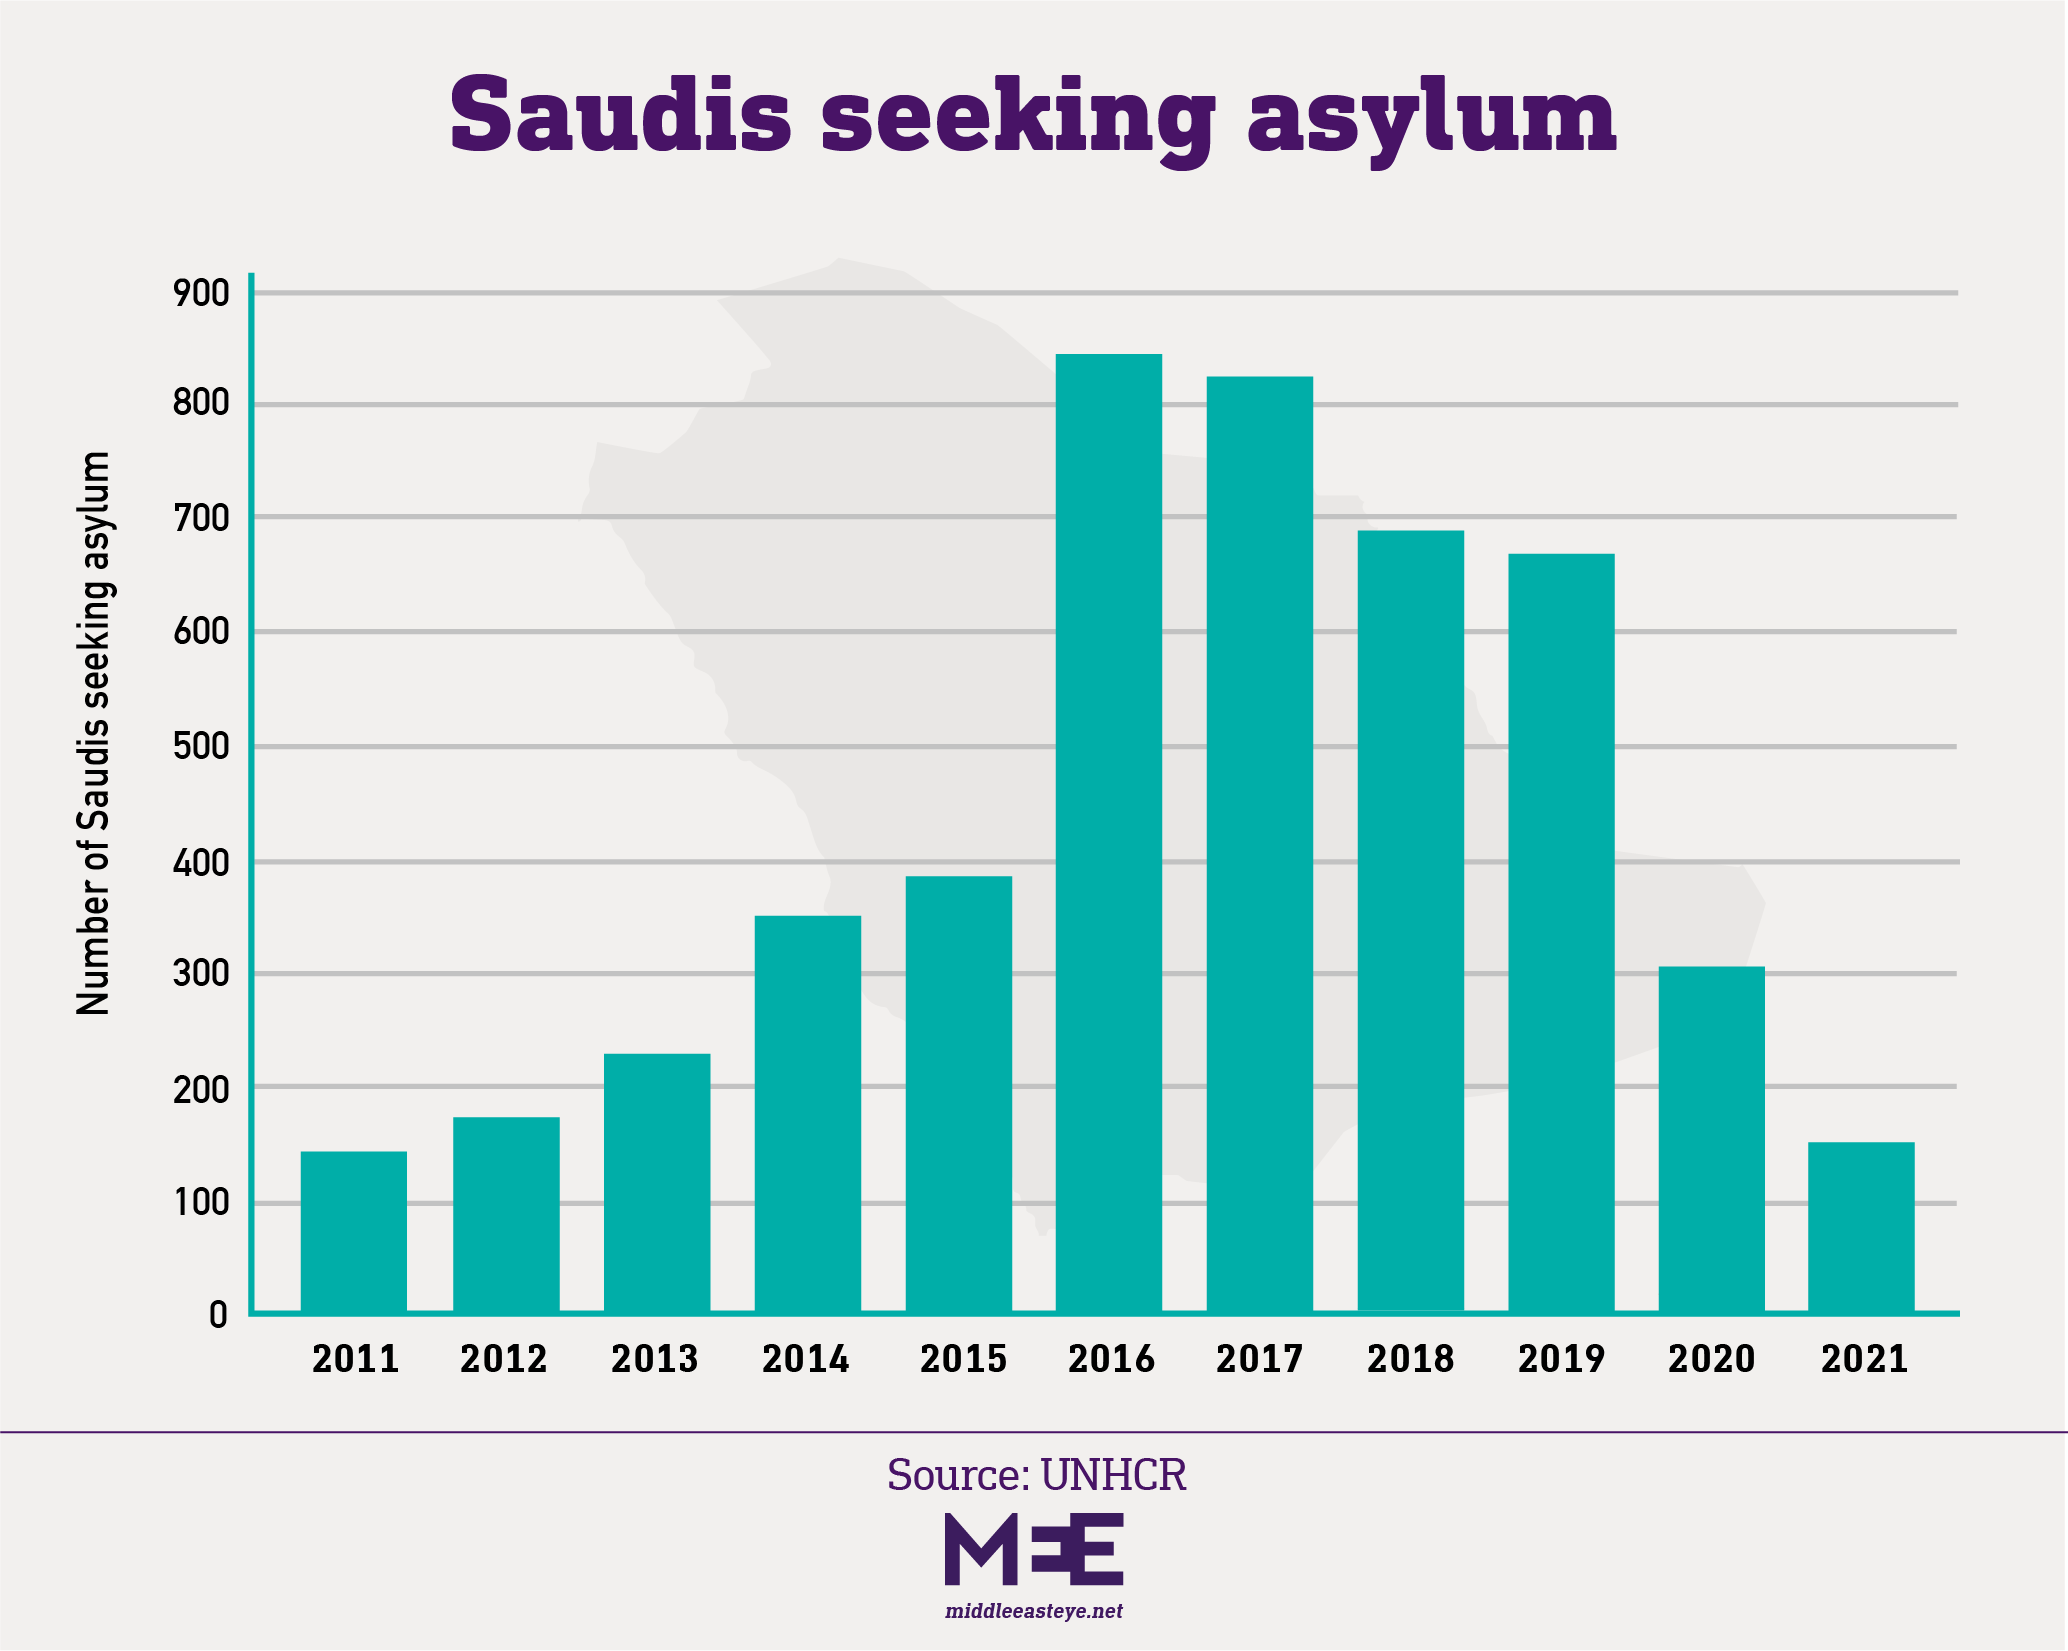 Saudi asylum seekers according to UNHCR